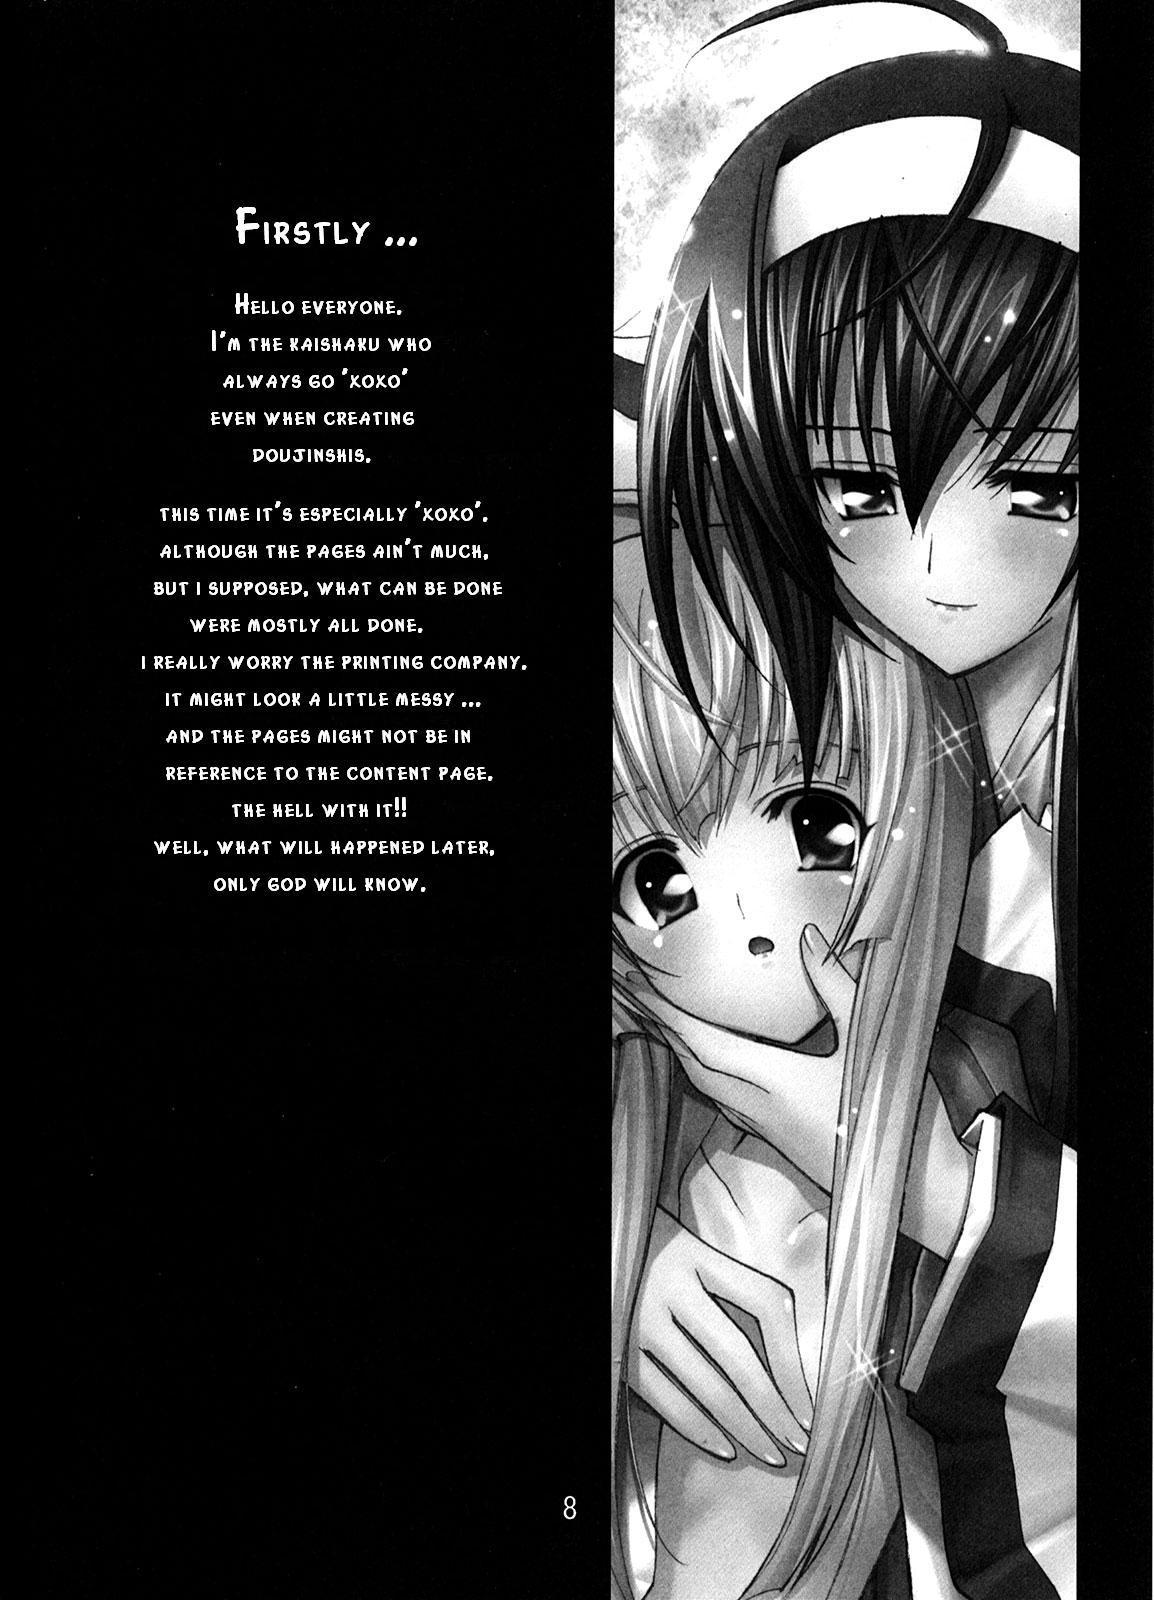  Aoi Tsuki to Taiyou to... - Kannazuki no miko Storyline - Page 2